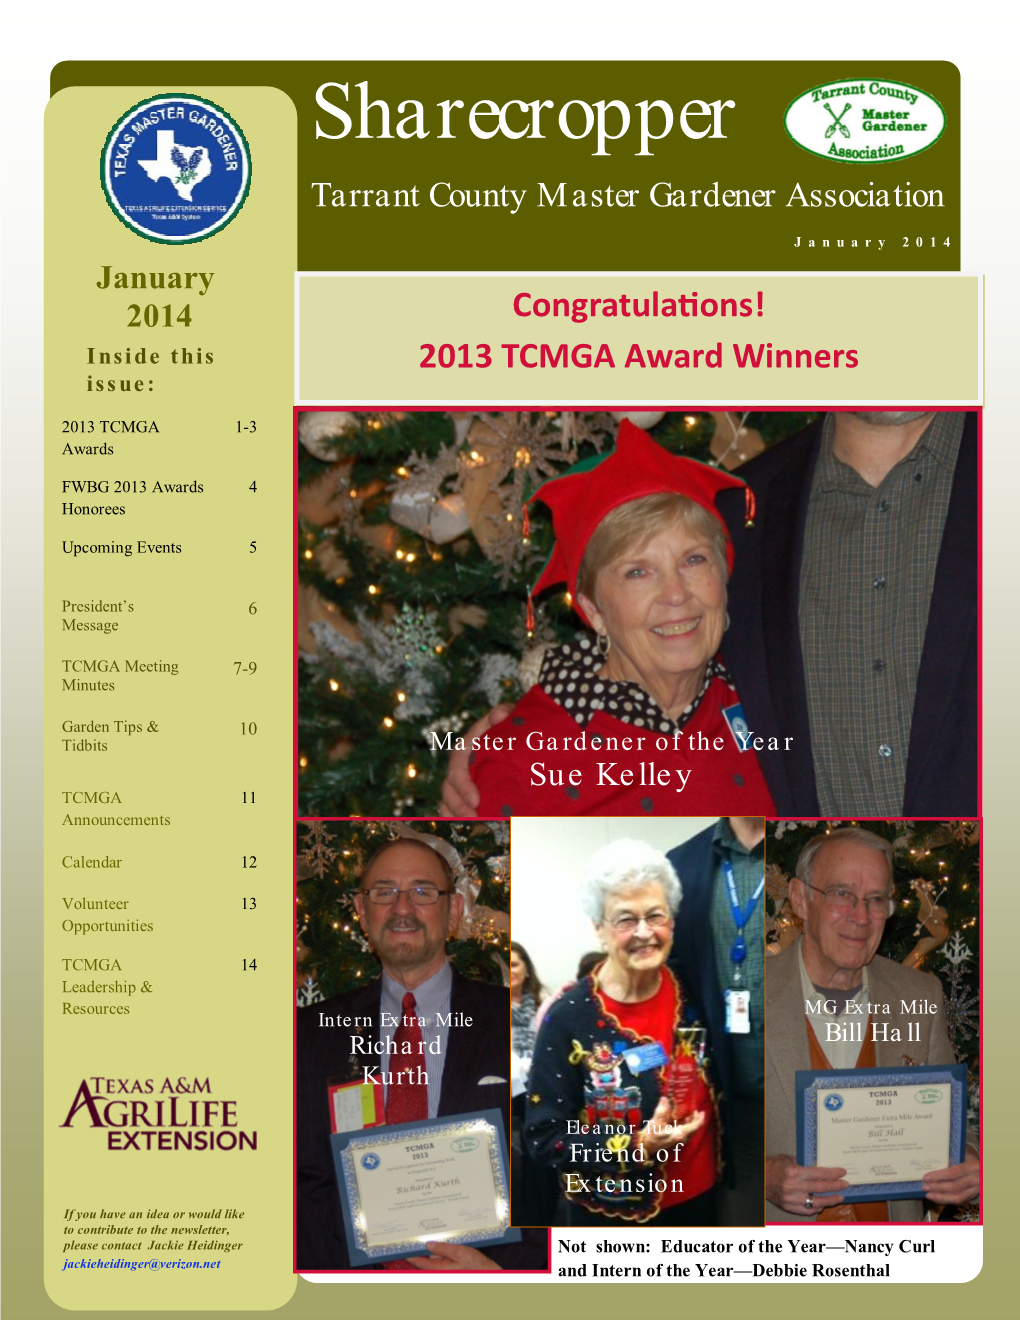 Sharecropper Tarrant County Master Gardener Association